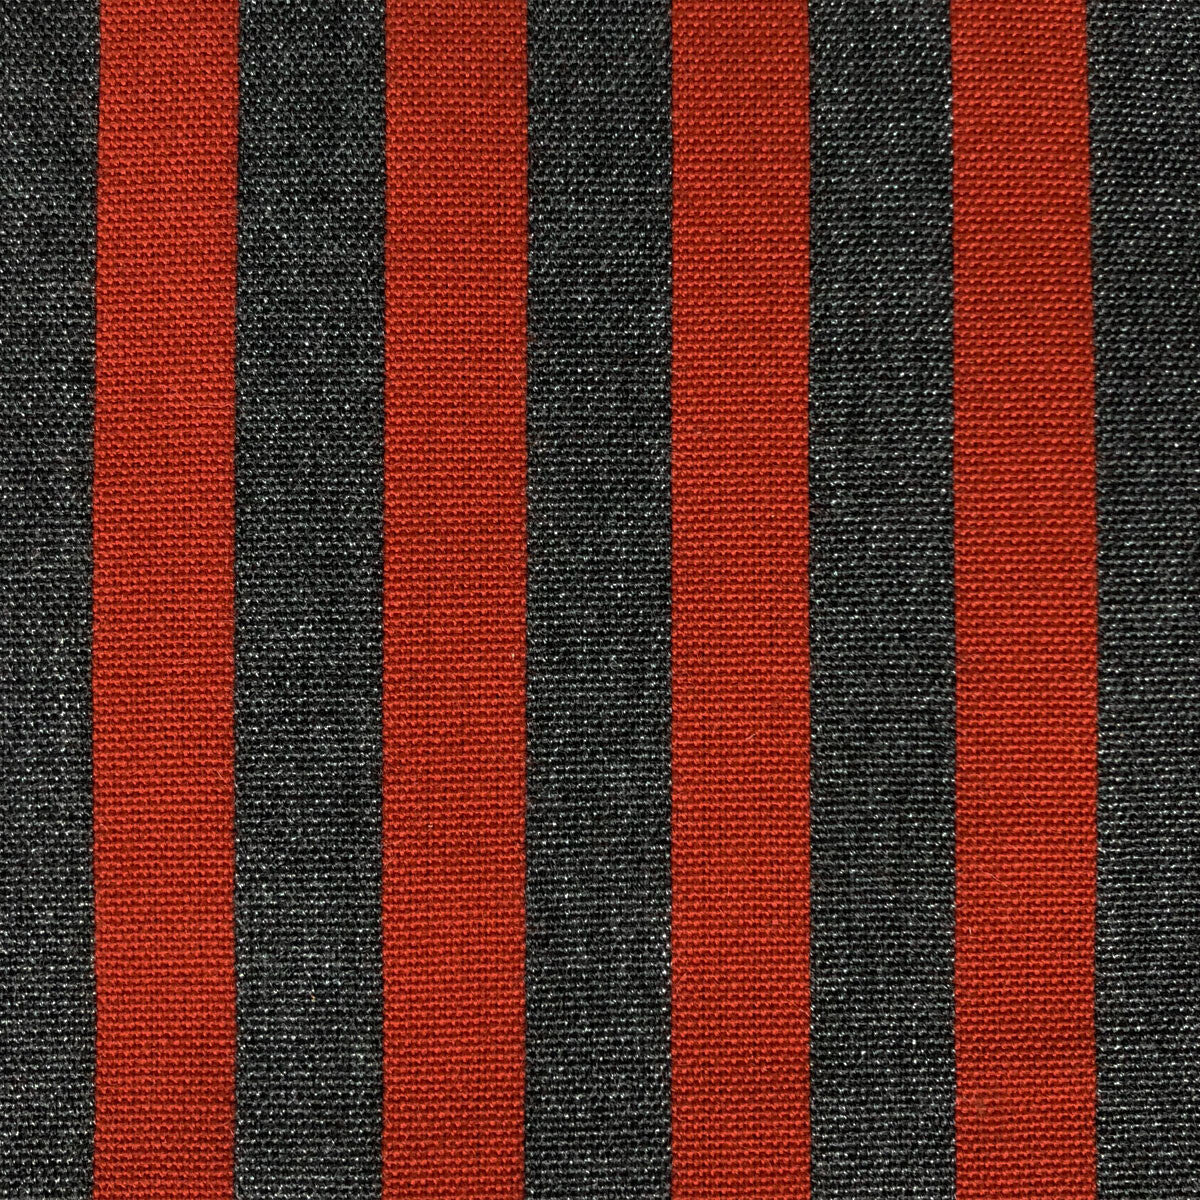 Benjamin fabric in gris/rojo color - pattern LCT1057.002.0 - by Gaston y Daniela in the Lorenzo Castillo VI collection